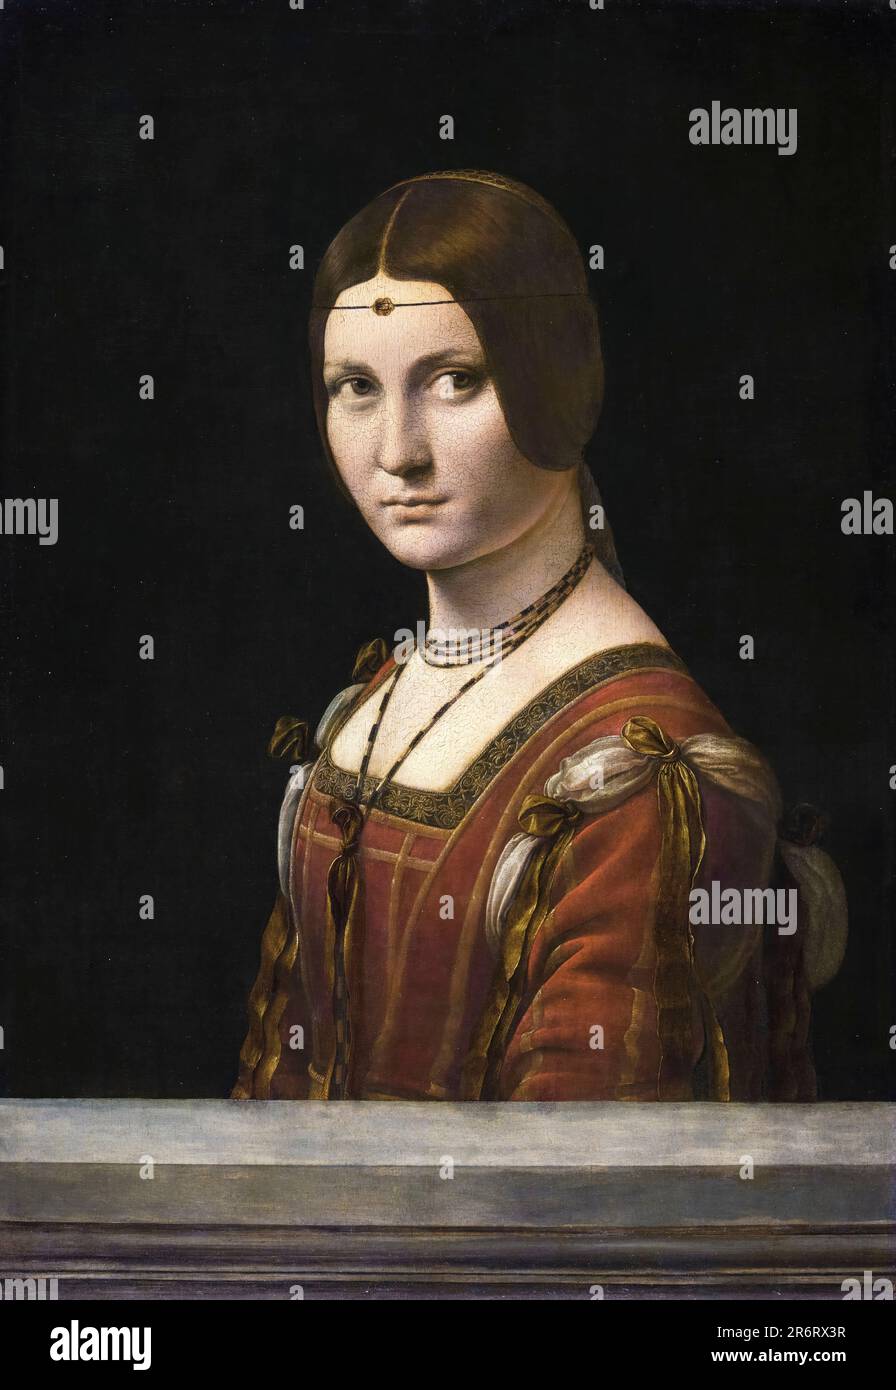 Leonardo da Vinci, Portrait of an Unknown Woman, 'La Belle Ferronniere', portrait painting in oil on panel, circa 1496 Stock Photo